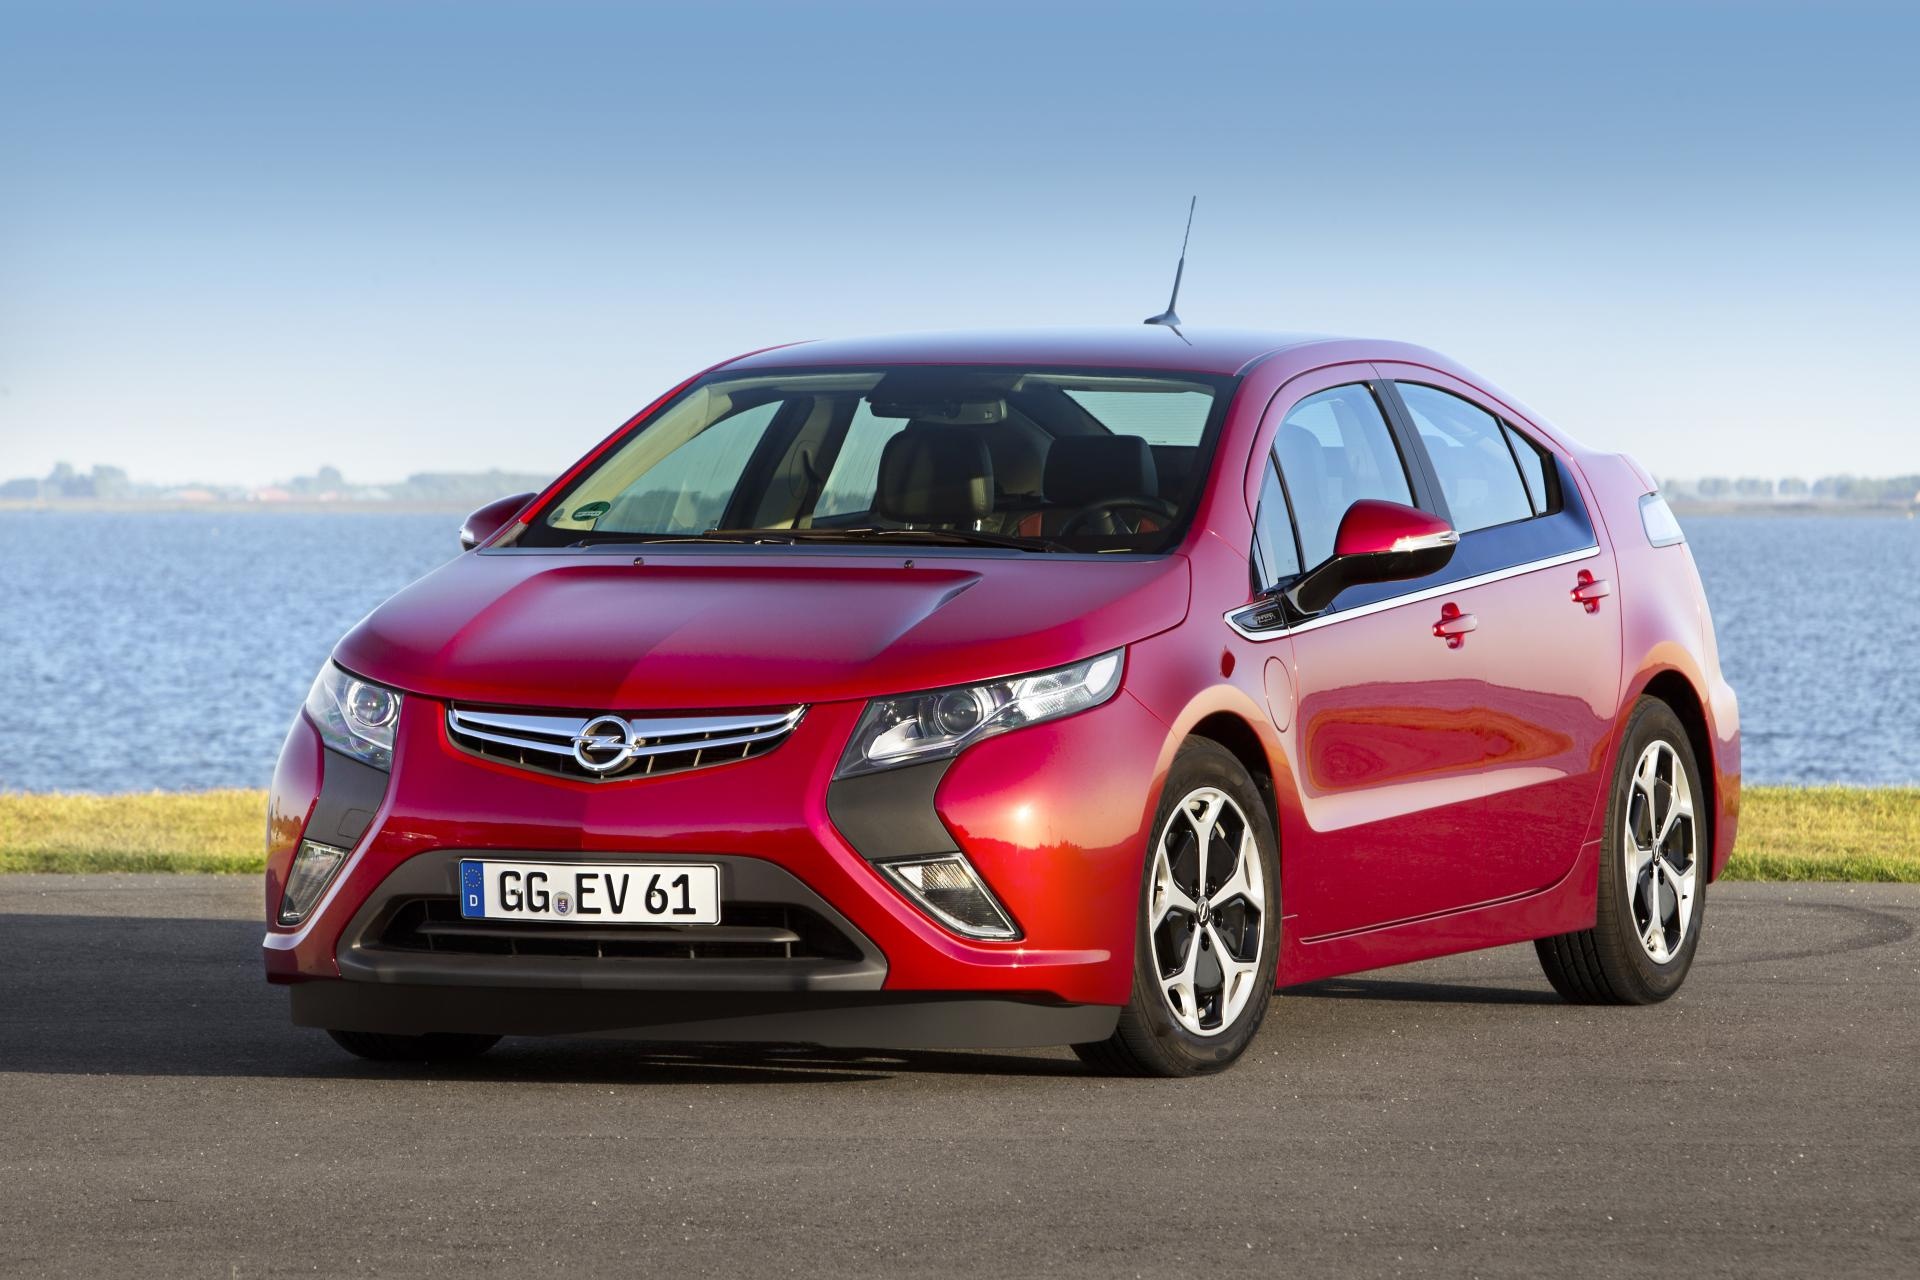 Opel Ampera, 2012 model news, Electric vehicle information, Car enthusiasts' resource, 1920x1280 HD Desktop